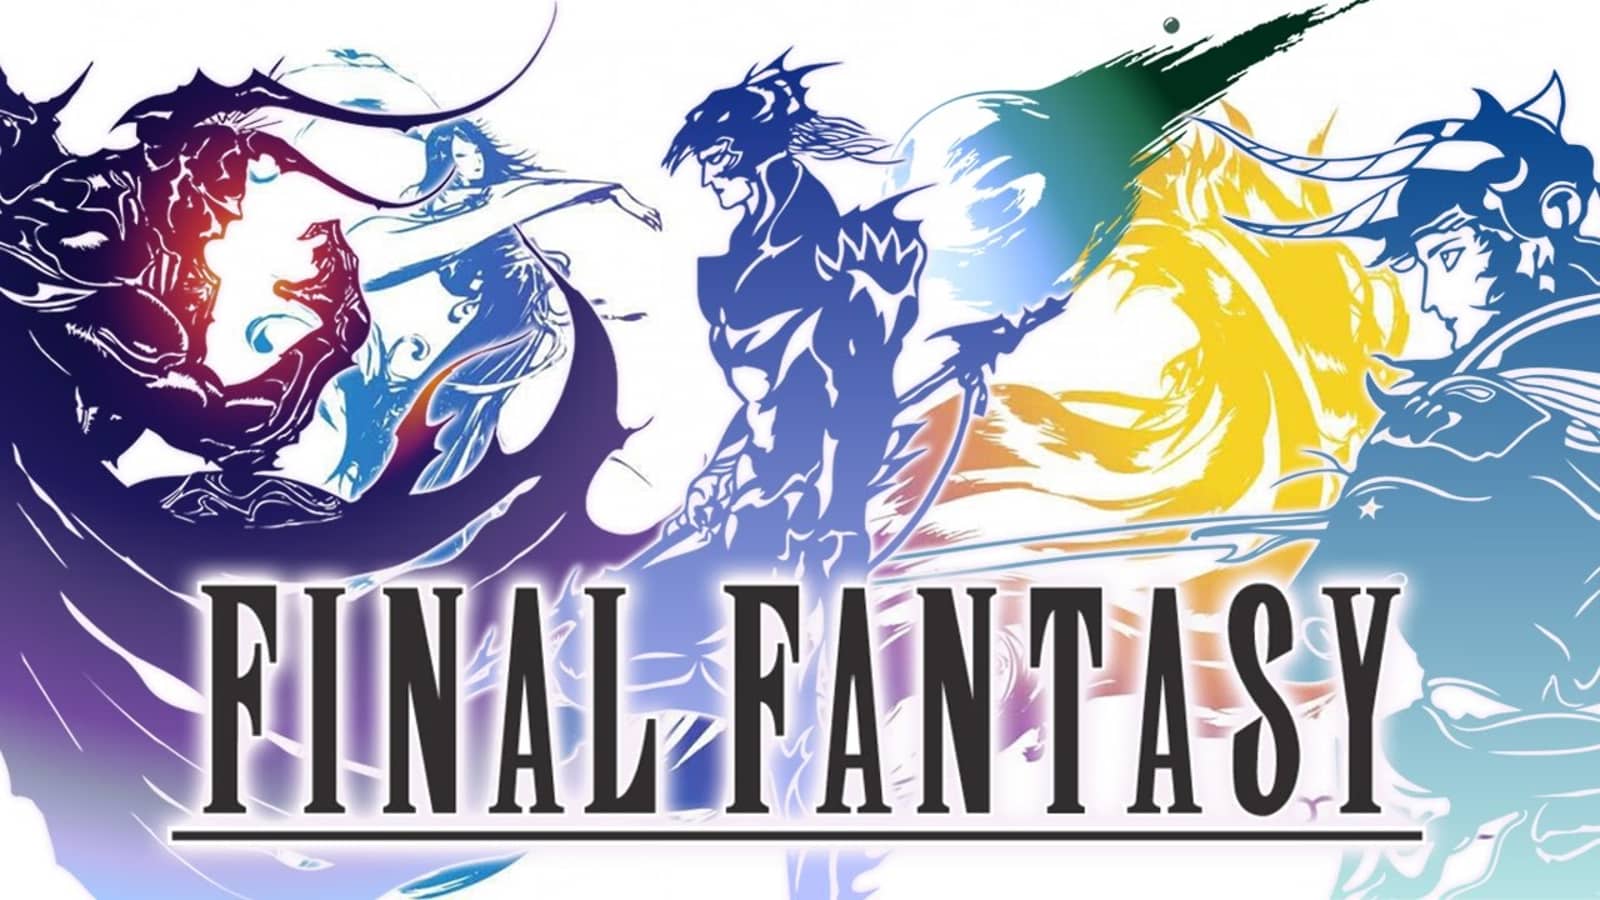 Best Final Fantasy games